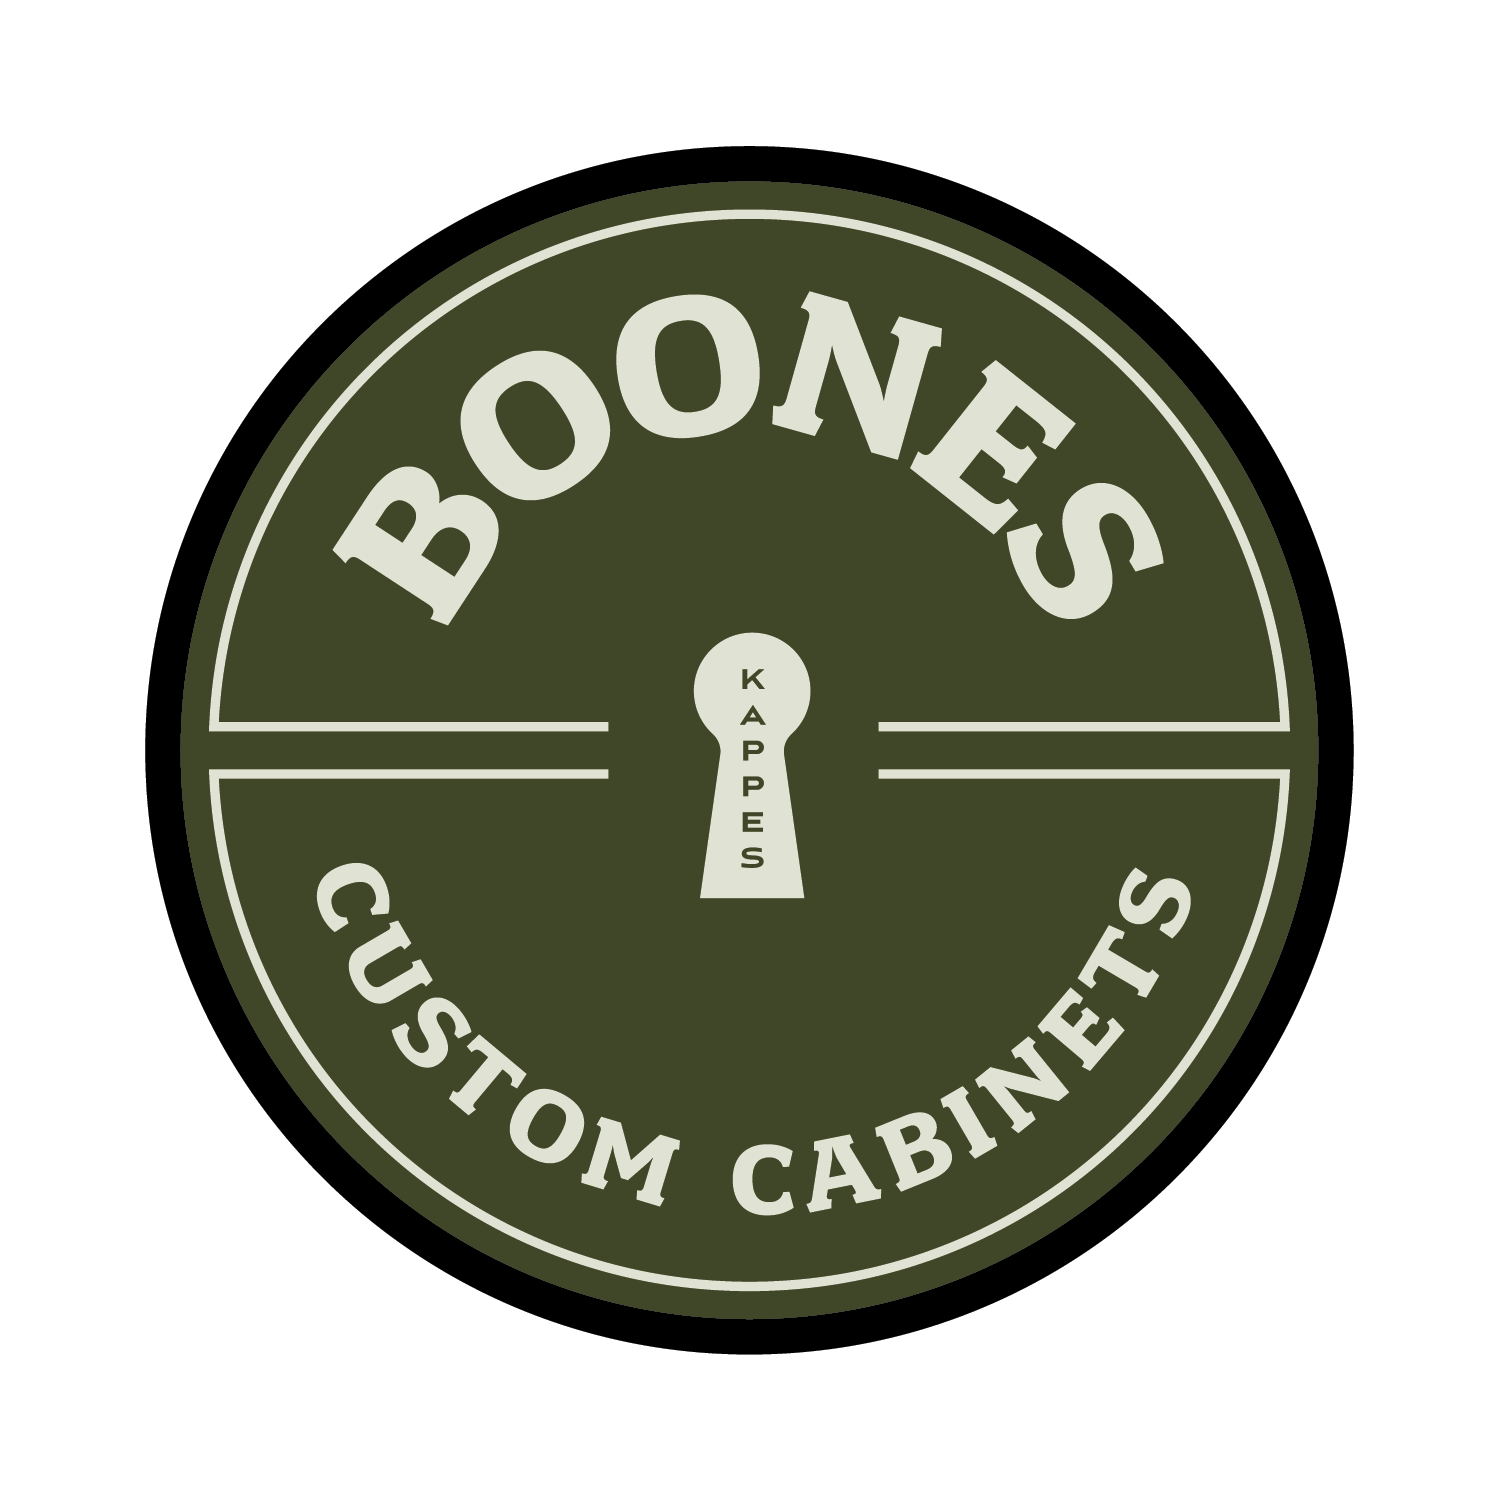 Boones Custom Cabinets